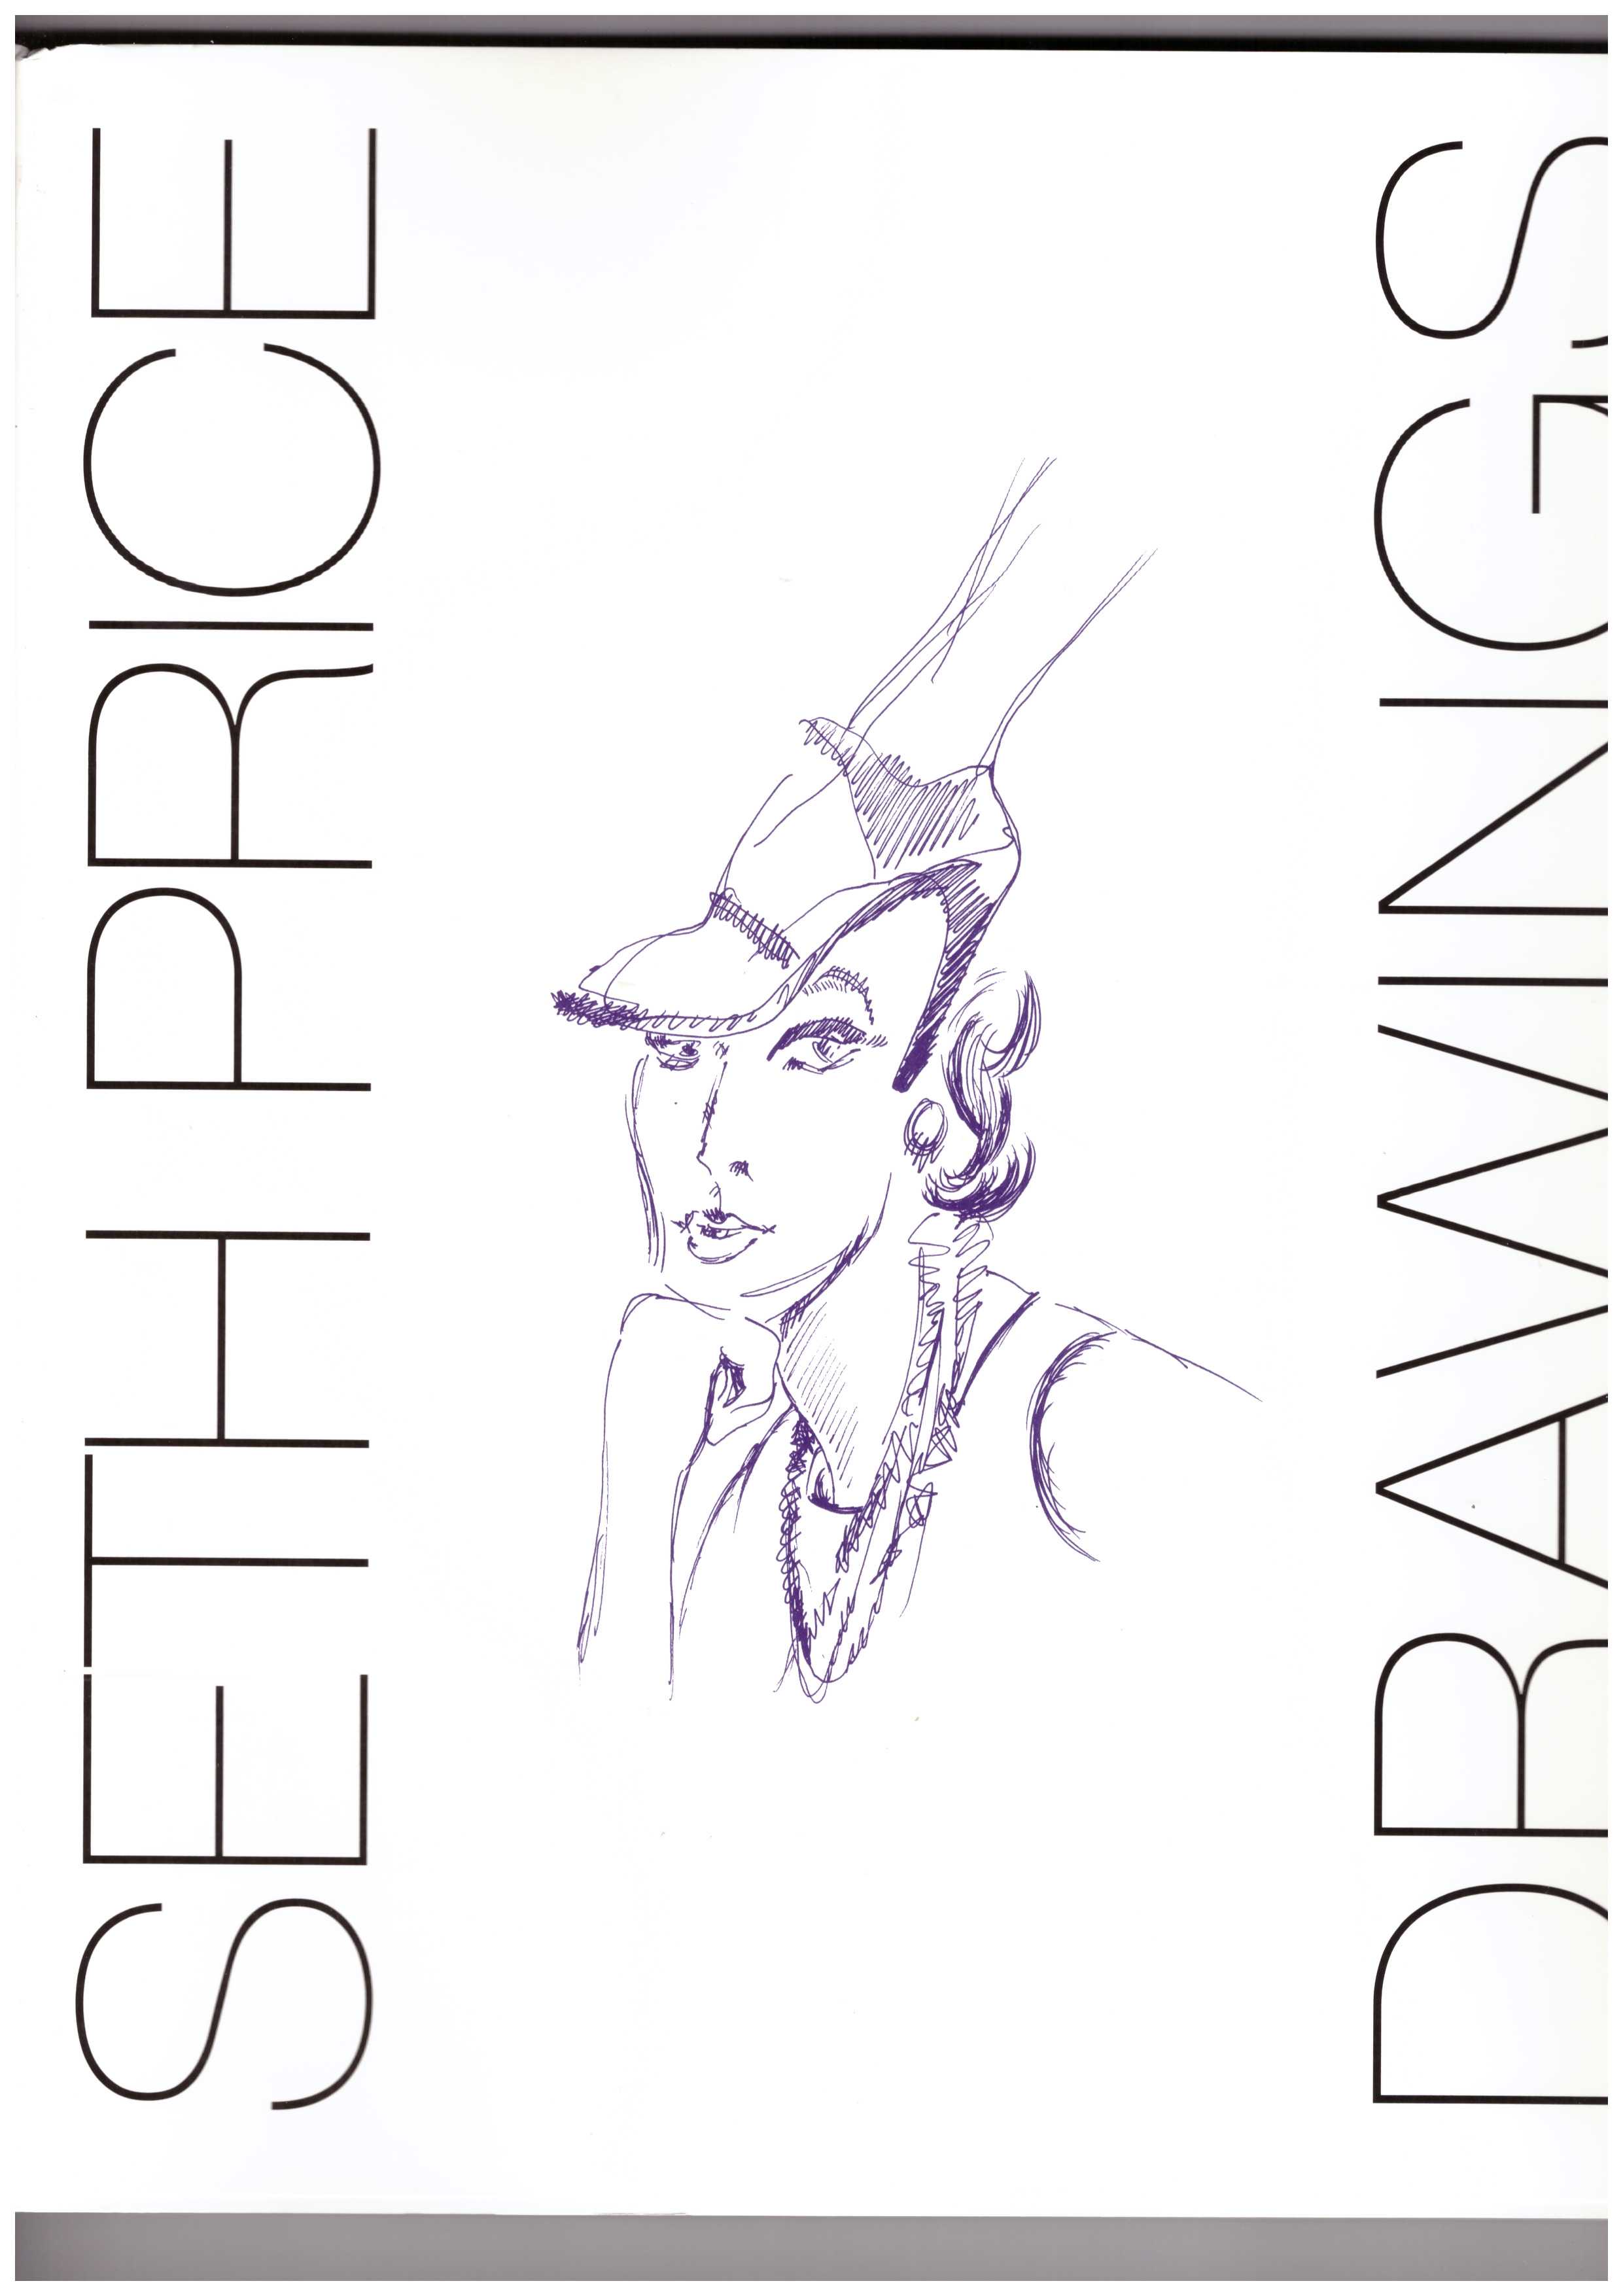 PRICE, Seth; FUNKE, Bettina (ed.) - Seth Price. Drawings